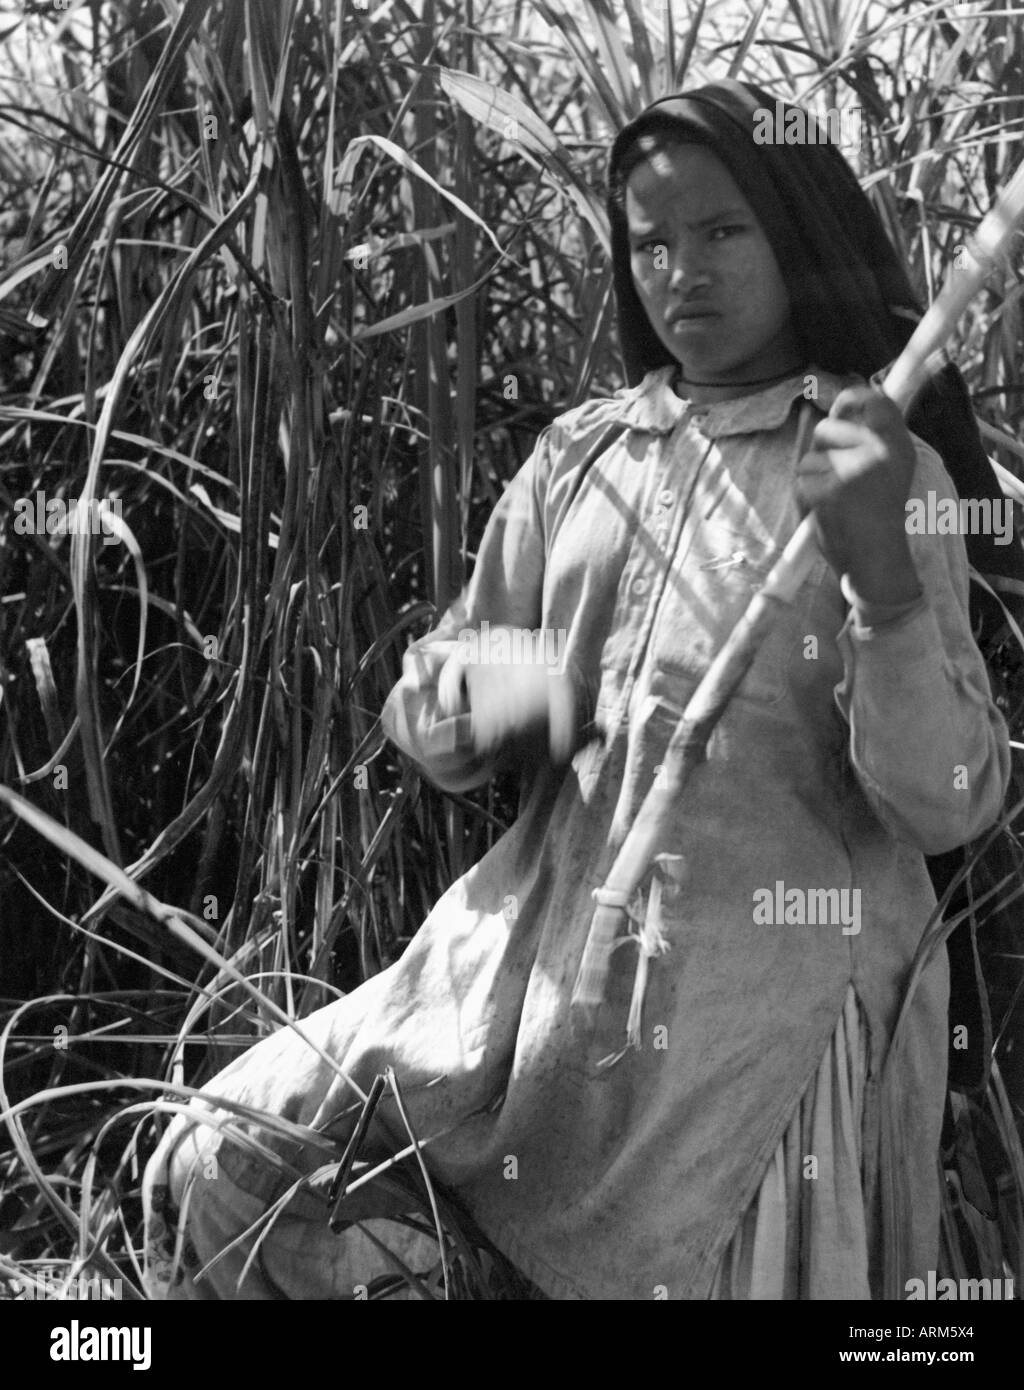 VRB101244 Indian working woman harvesting sugarcane crop Saharanpur Uttar Pradesh India 1940 s Stock Photo